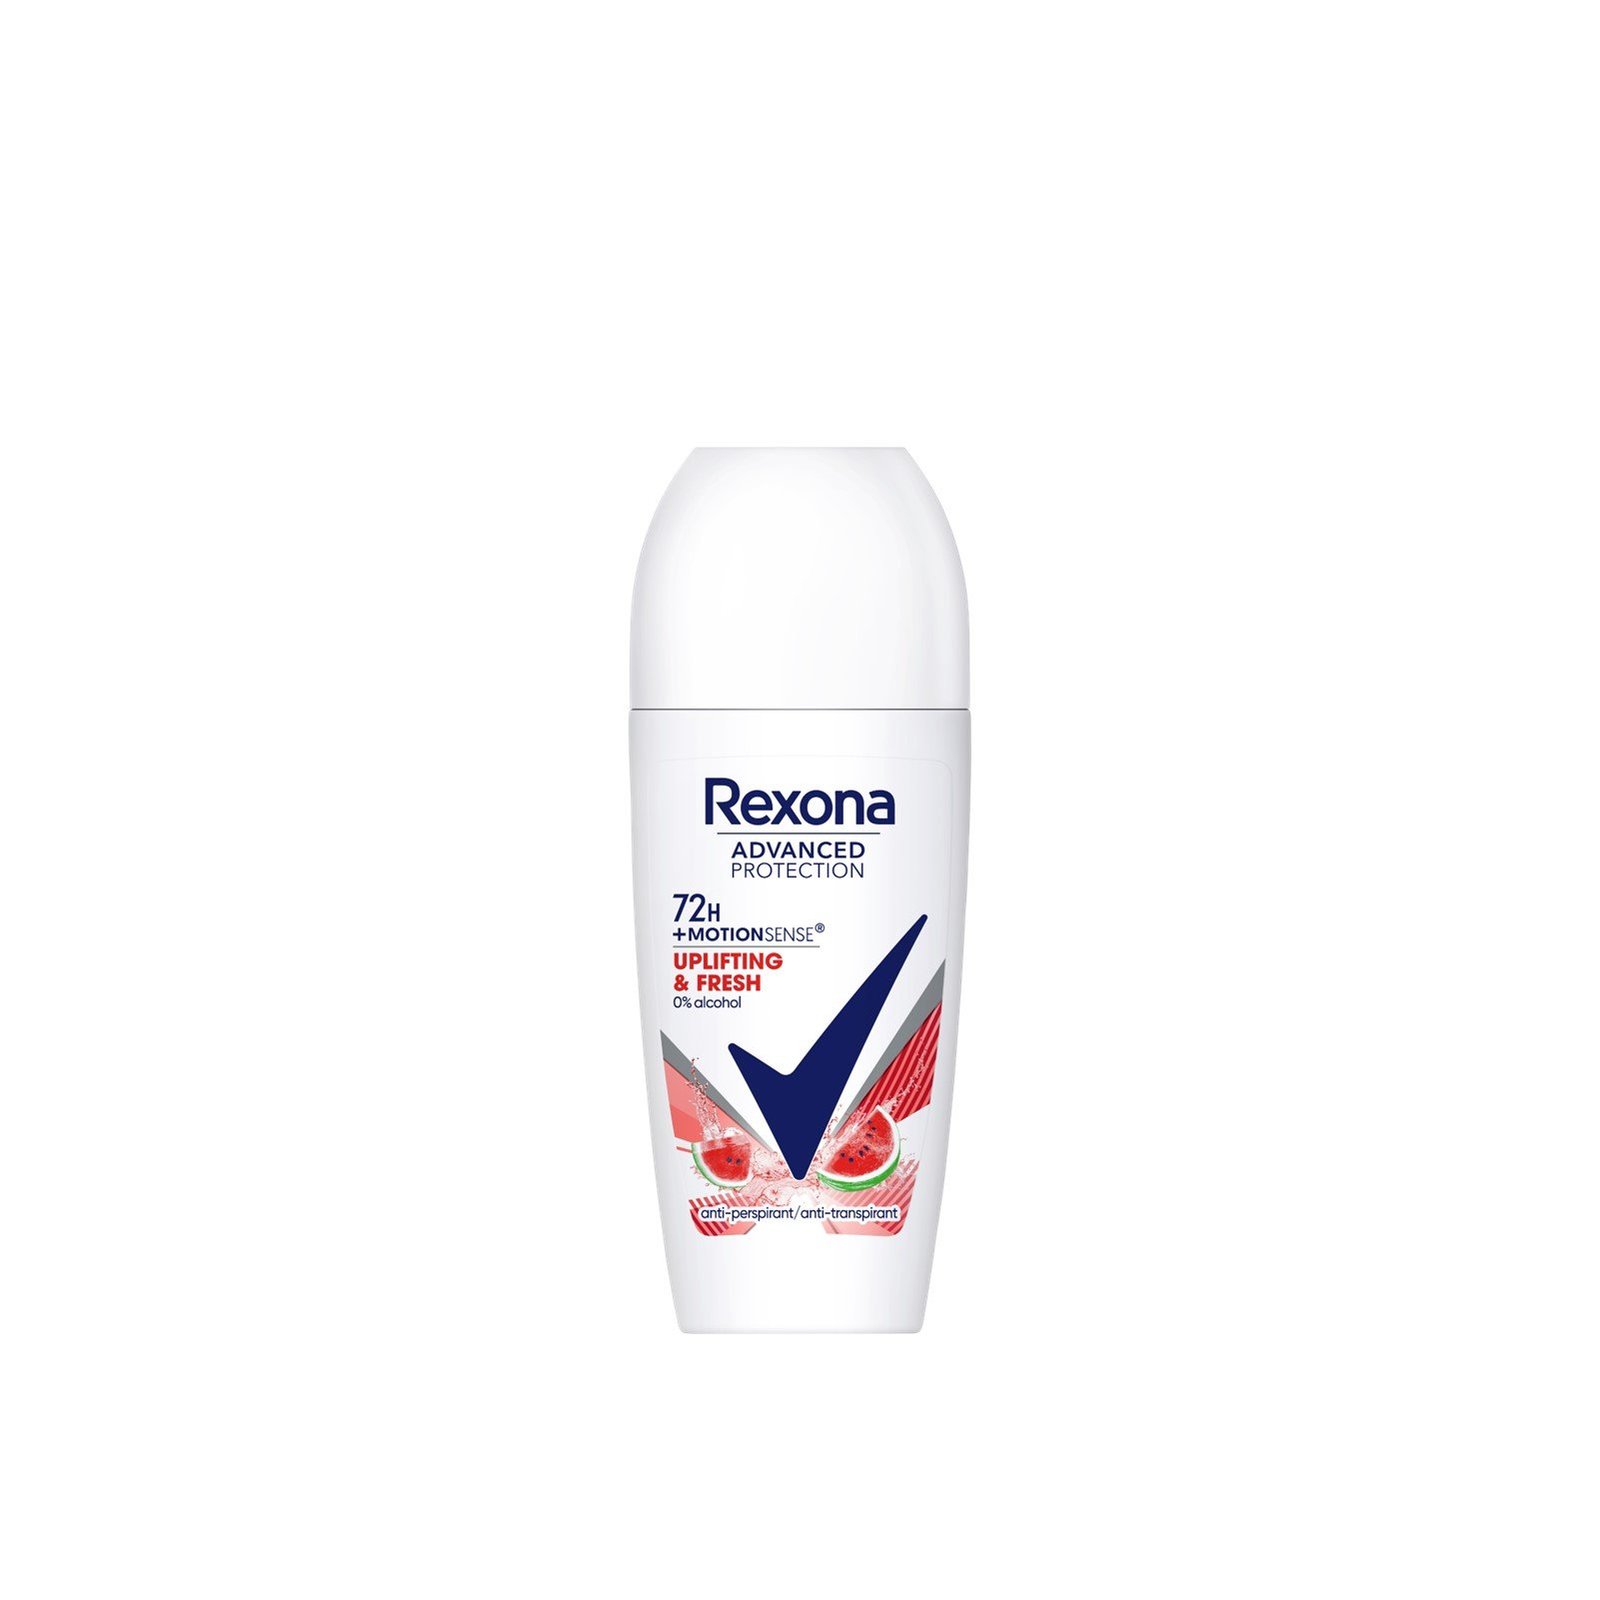 Desodorante Roll On Rexona Men Active Dry - 50ml